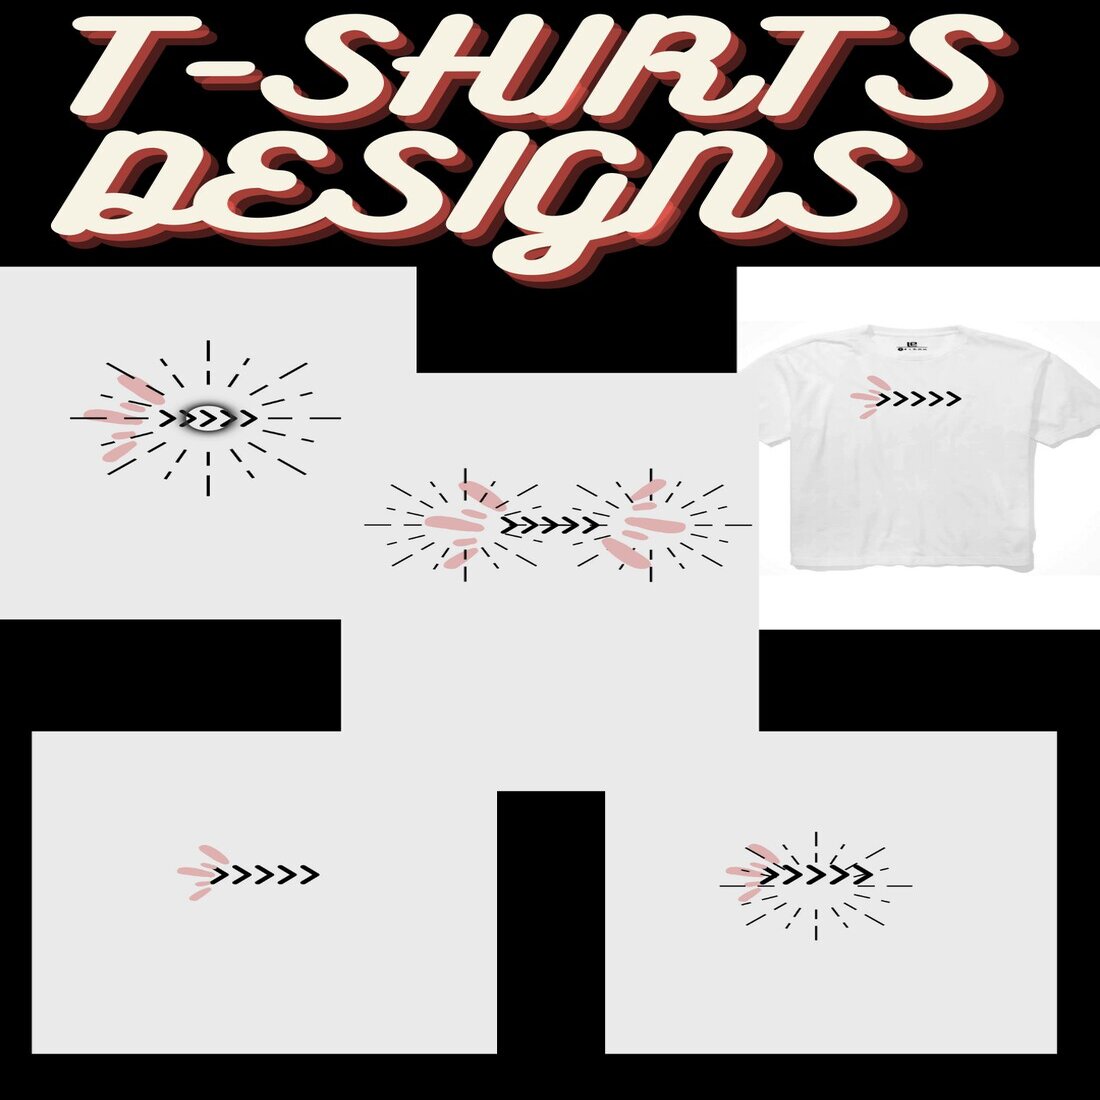 T-SHIRT DESIGNS |ABSTRACT DESIGNS |UNIQUE ELEMENTS cover image.